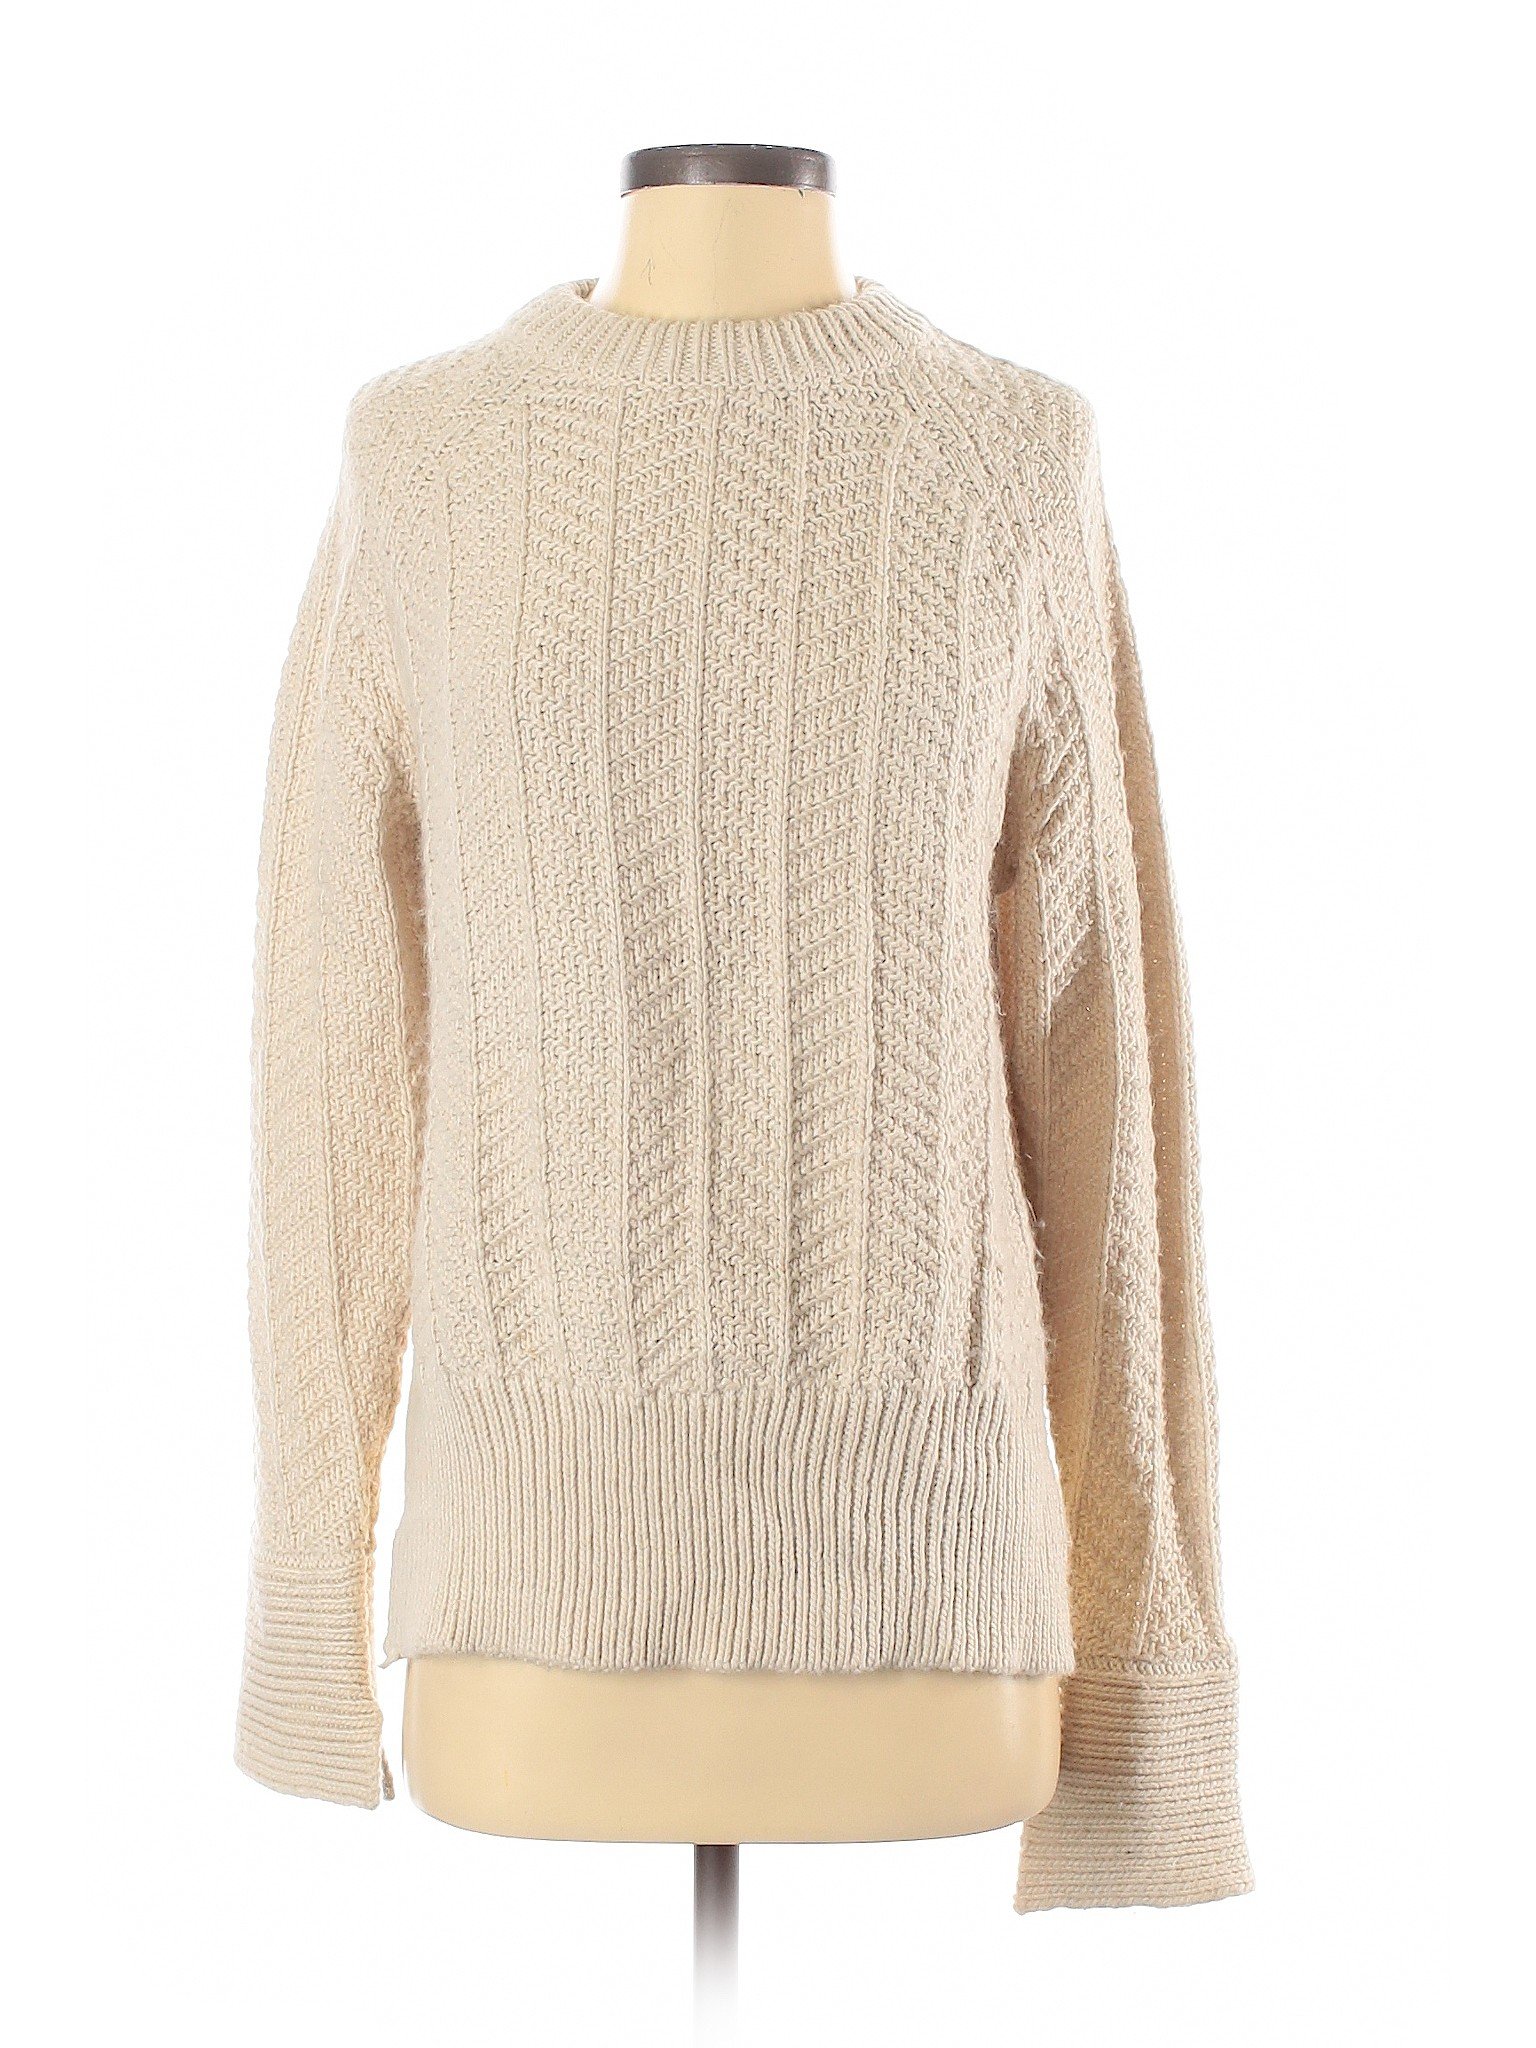 H&M Women Brown Pullover Sweater XS | eBay